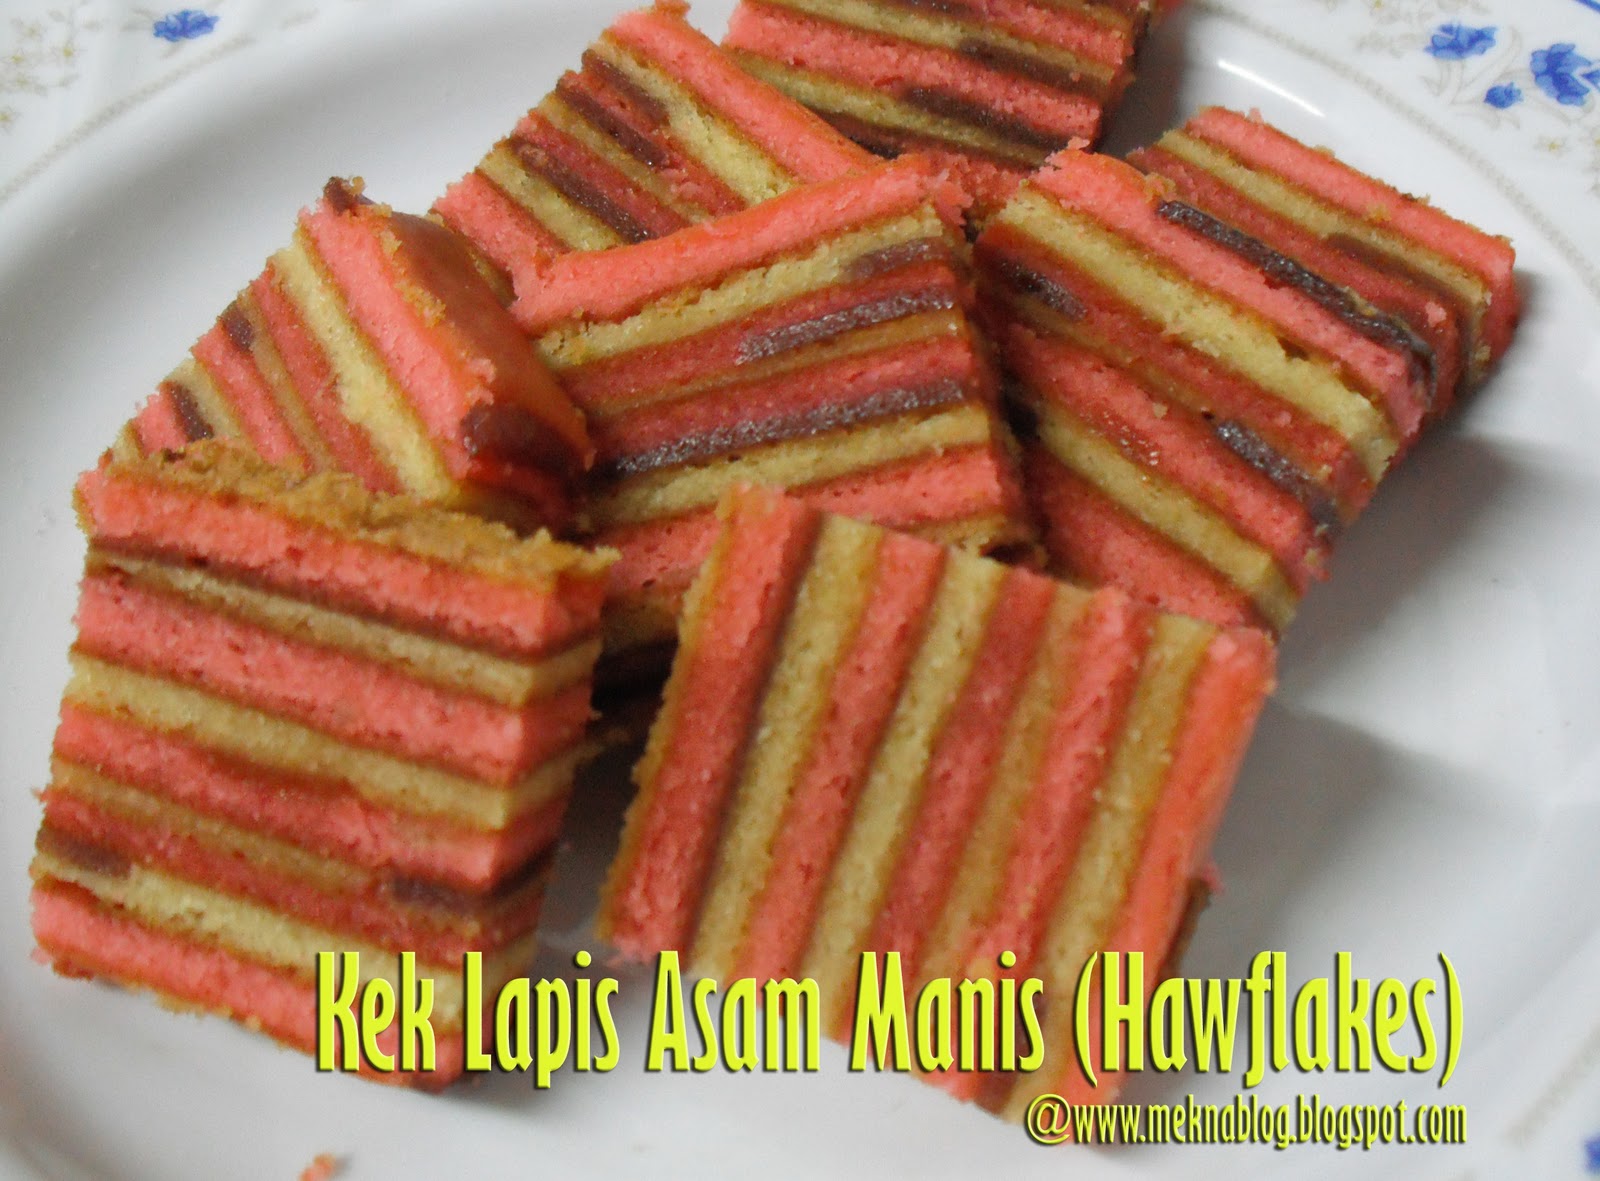 MeknaBlog BAKEatHOME: Kek Lapis Asam Manis (Hawflakes)